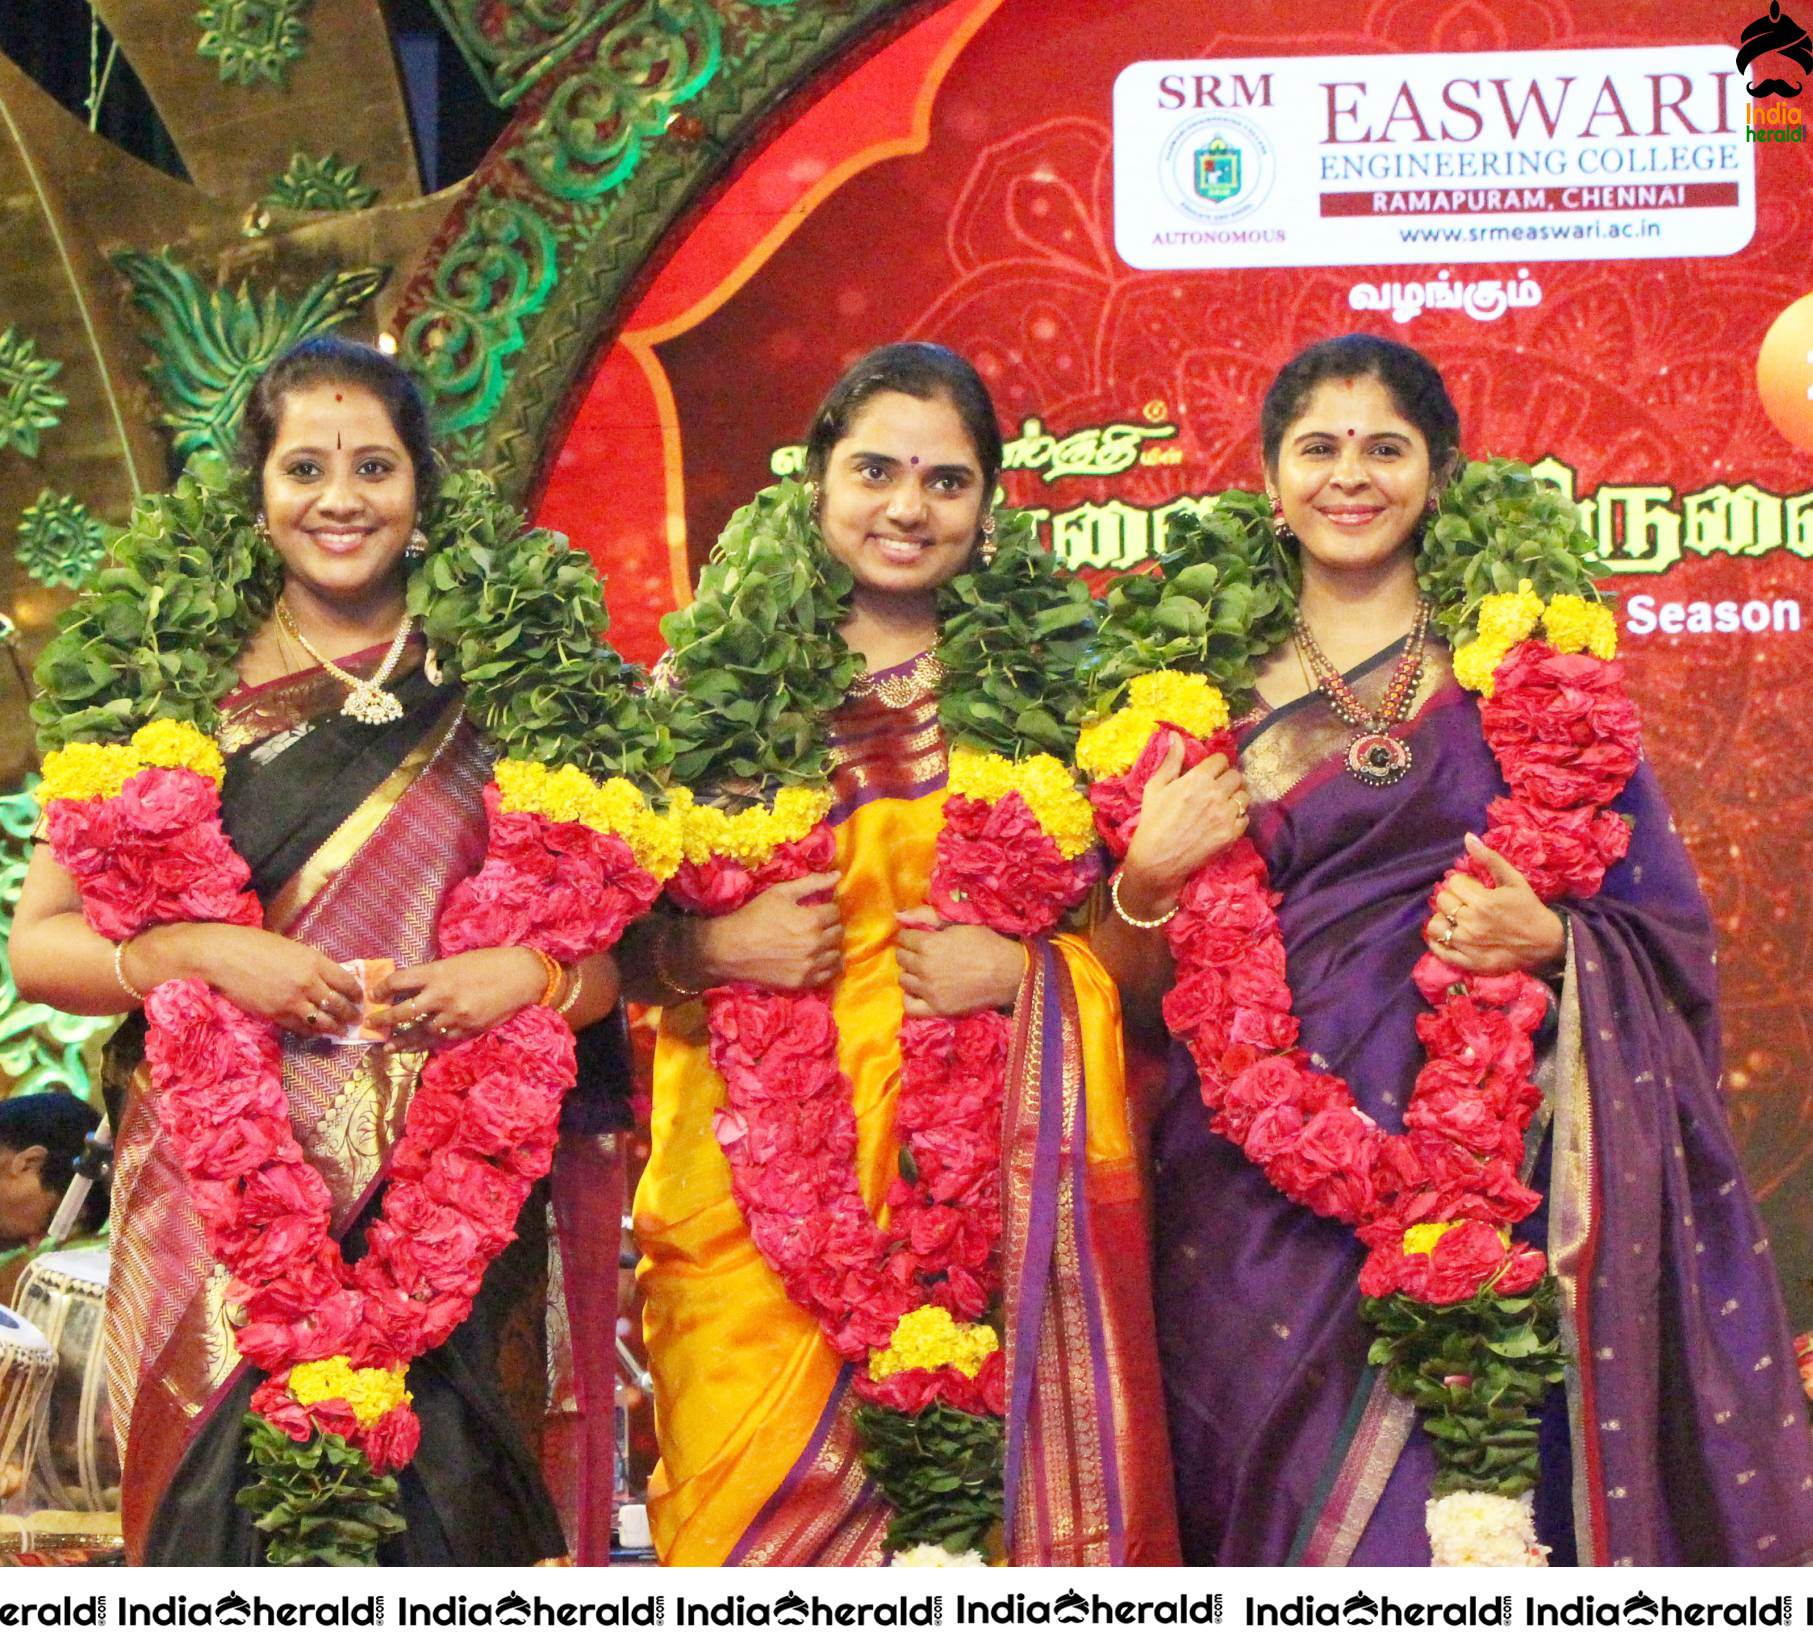 Chennaiyil Thiruvaiyaru Season 15 Day 3